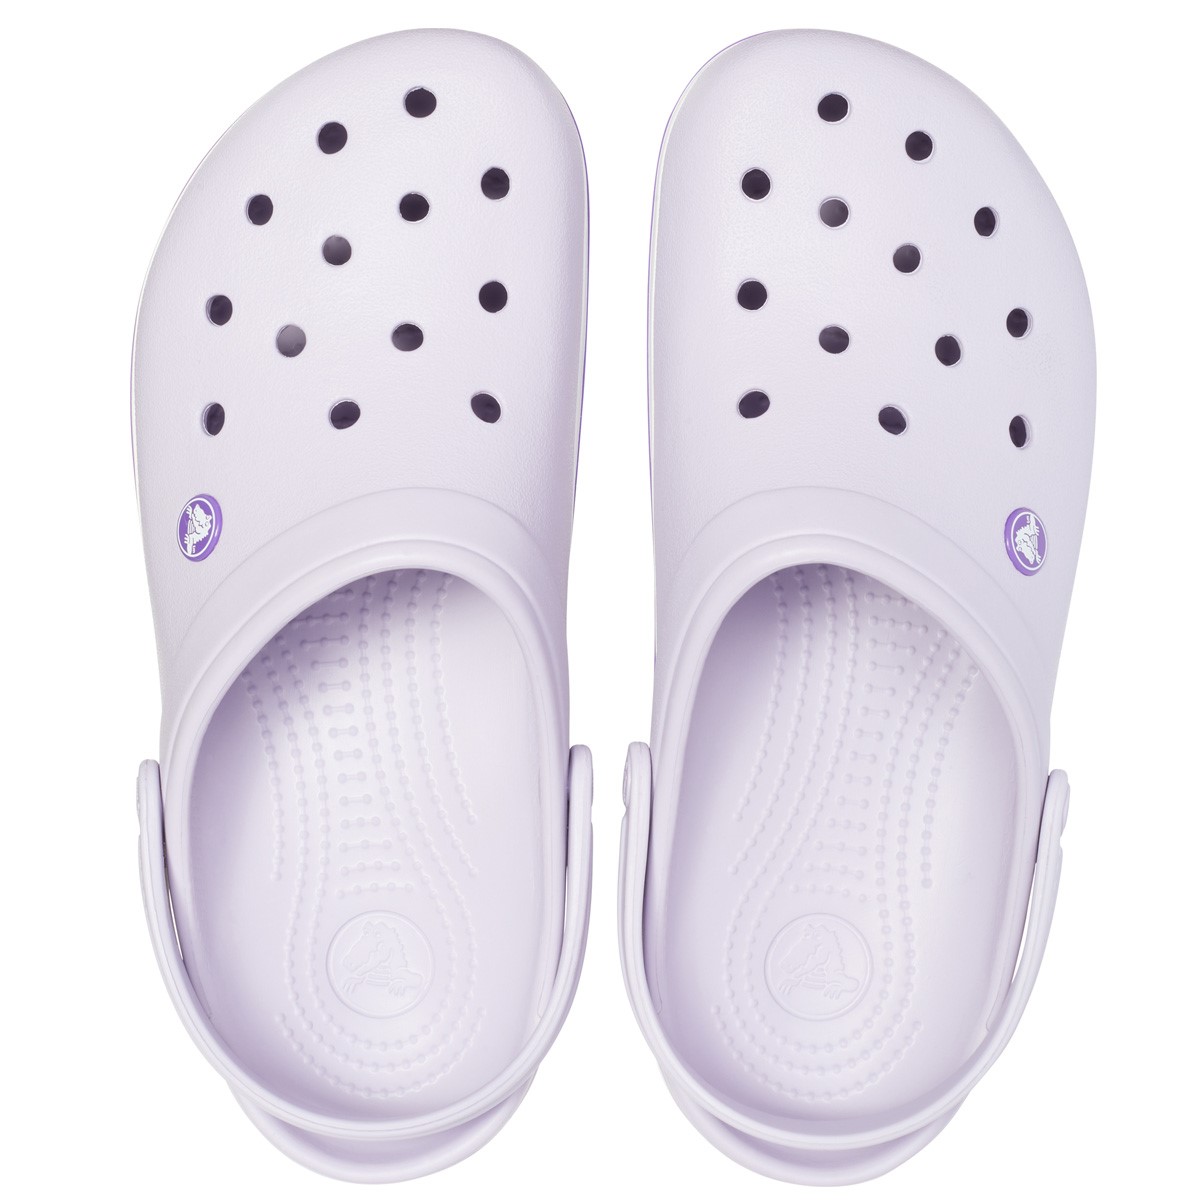 Crocs Unisex Sandalet 11016 Lavender/Purple